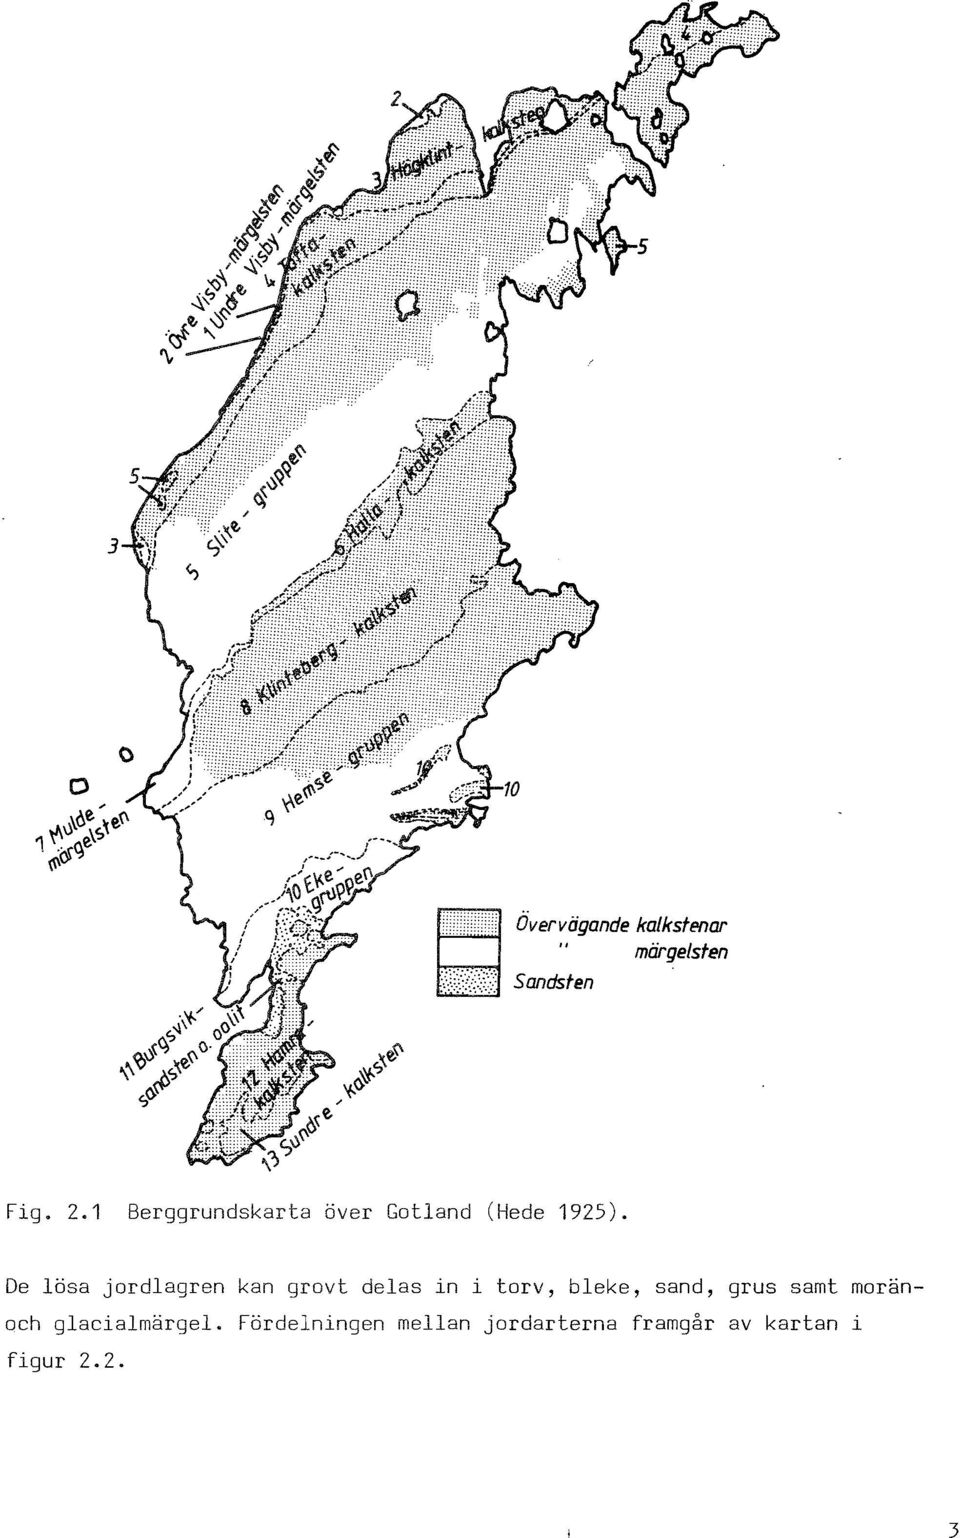 1 Berggrundskarta över Gotland (Hede 1925).